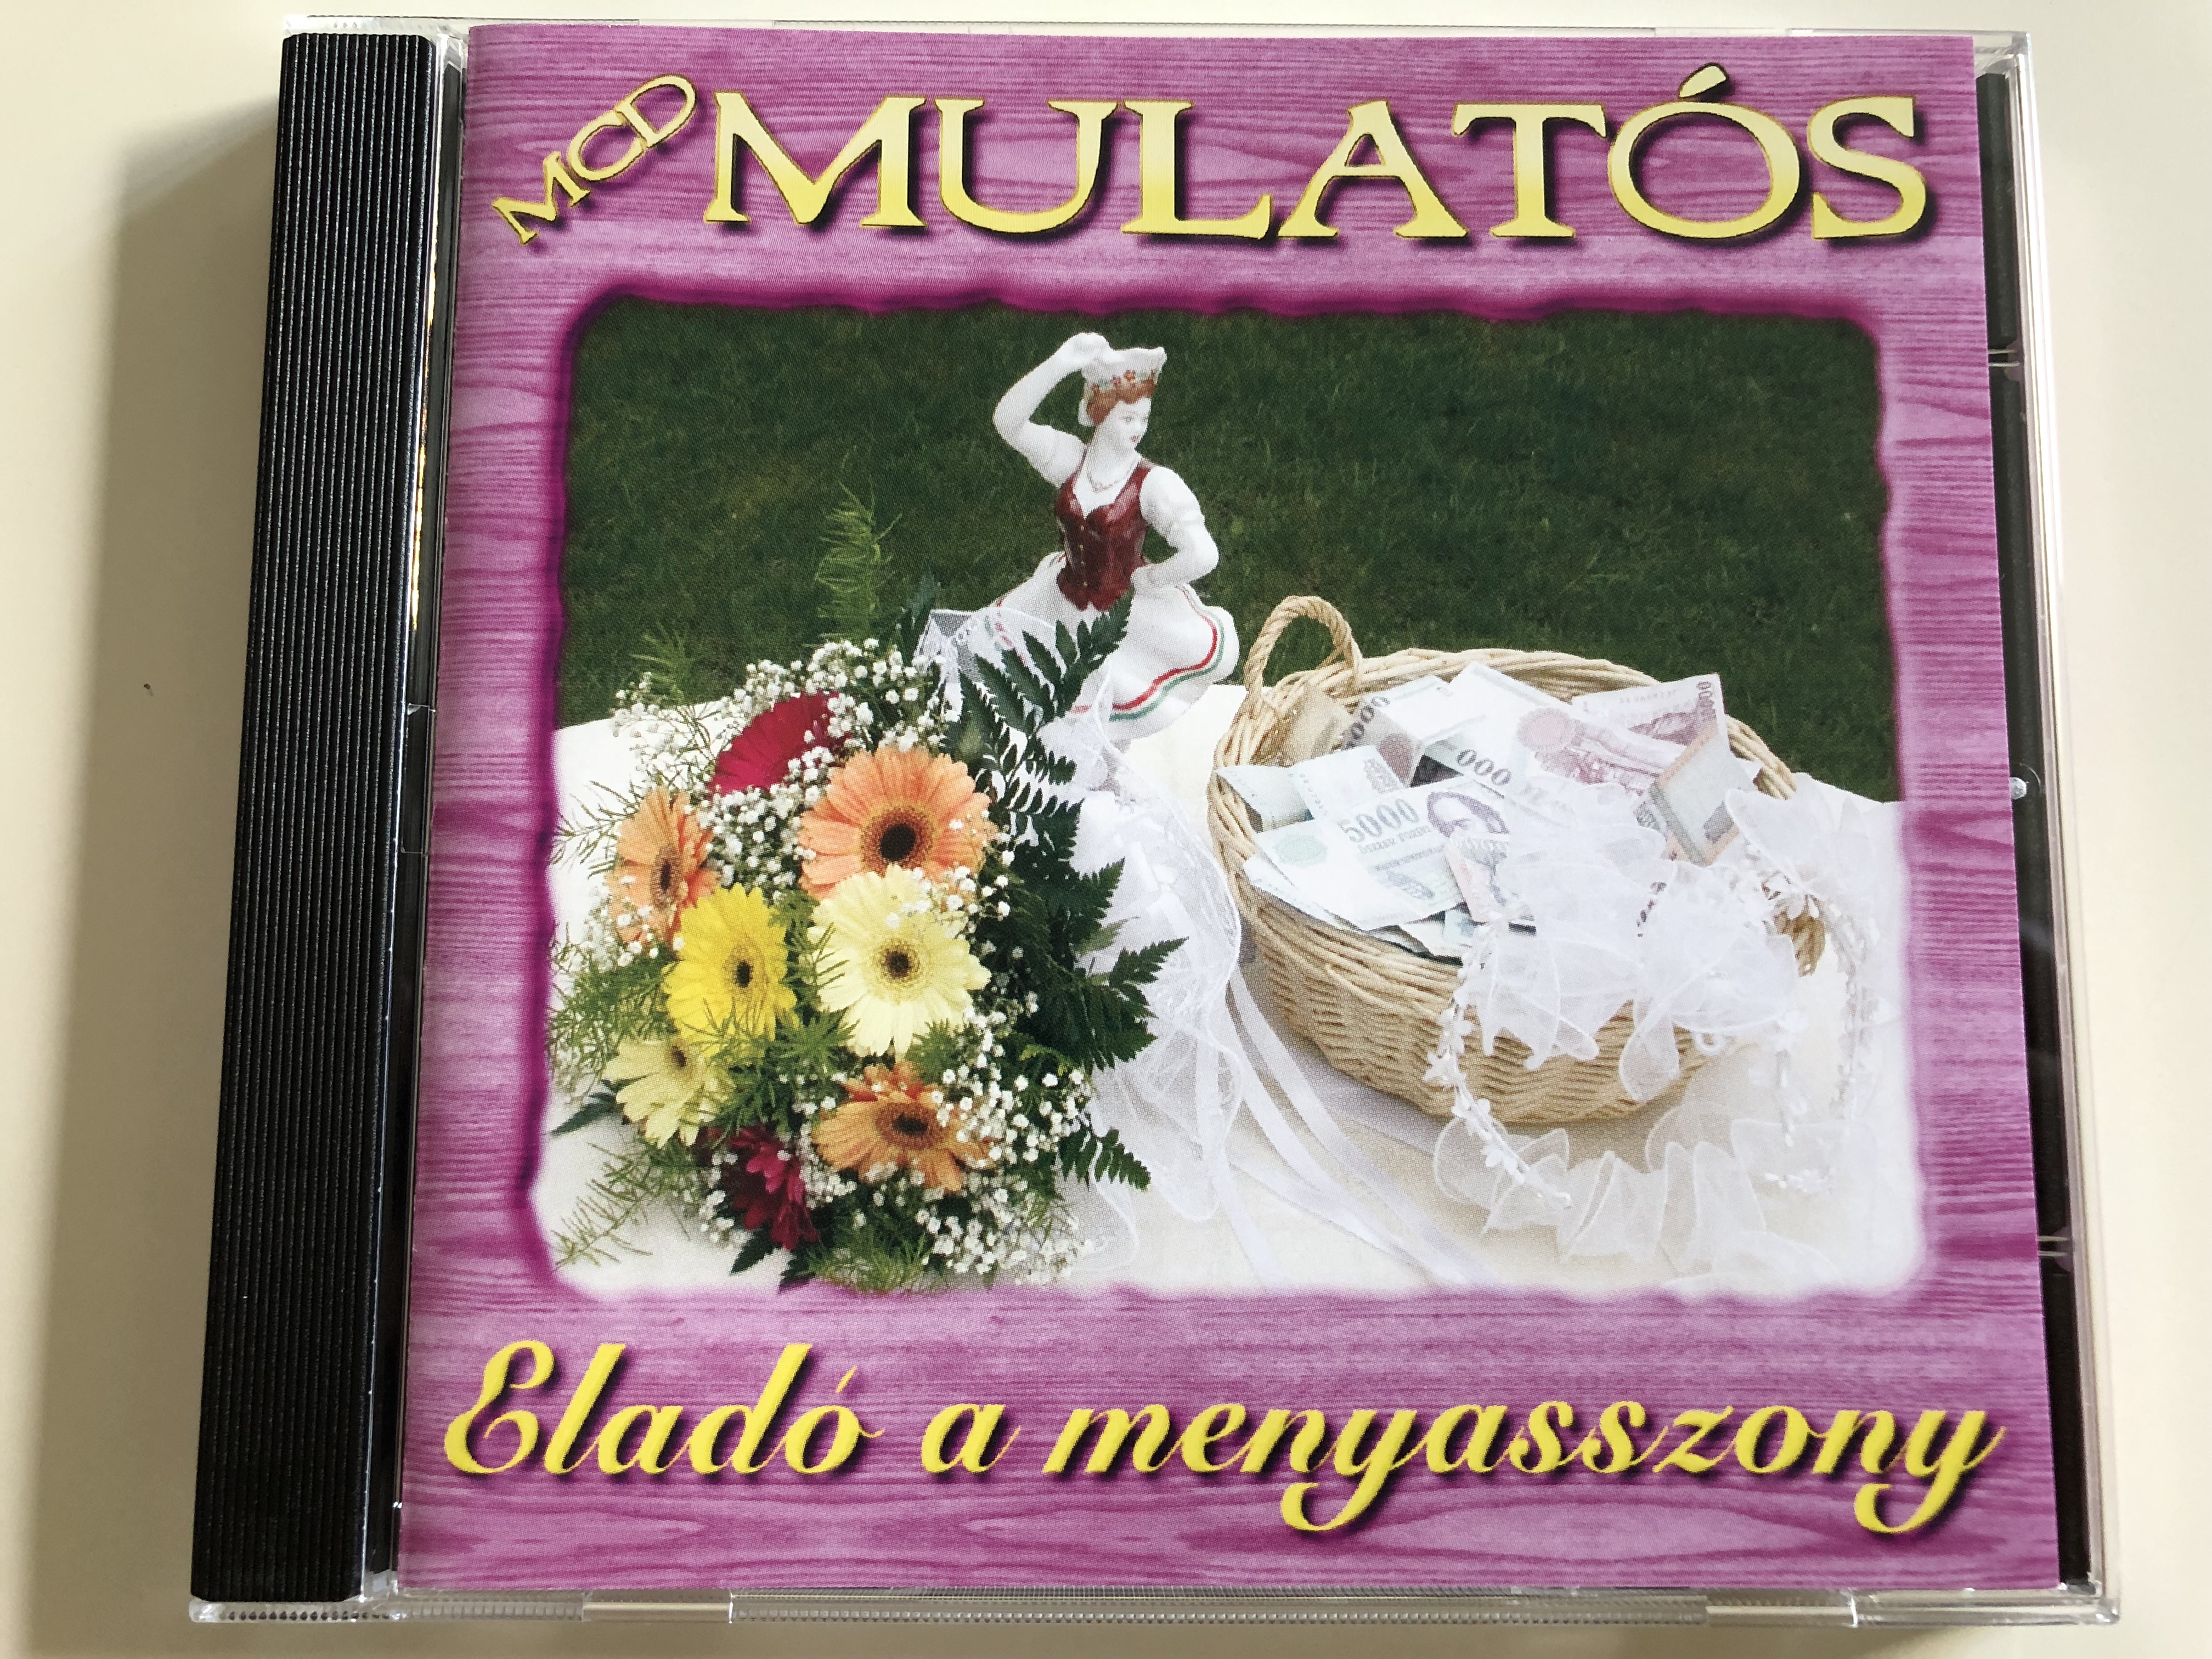 mcd-mulat-s-elad-a-menyasszony-kov-cs-r-bert-varga-gergely-audio-cd-2005-0352mcd-1-.jpg